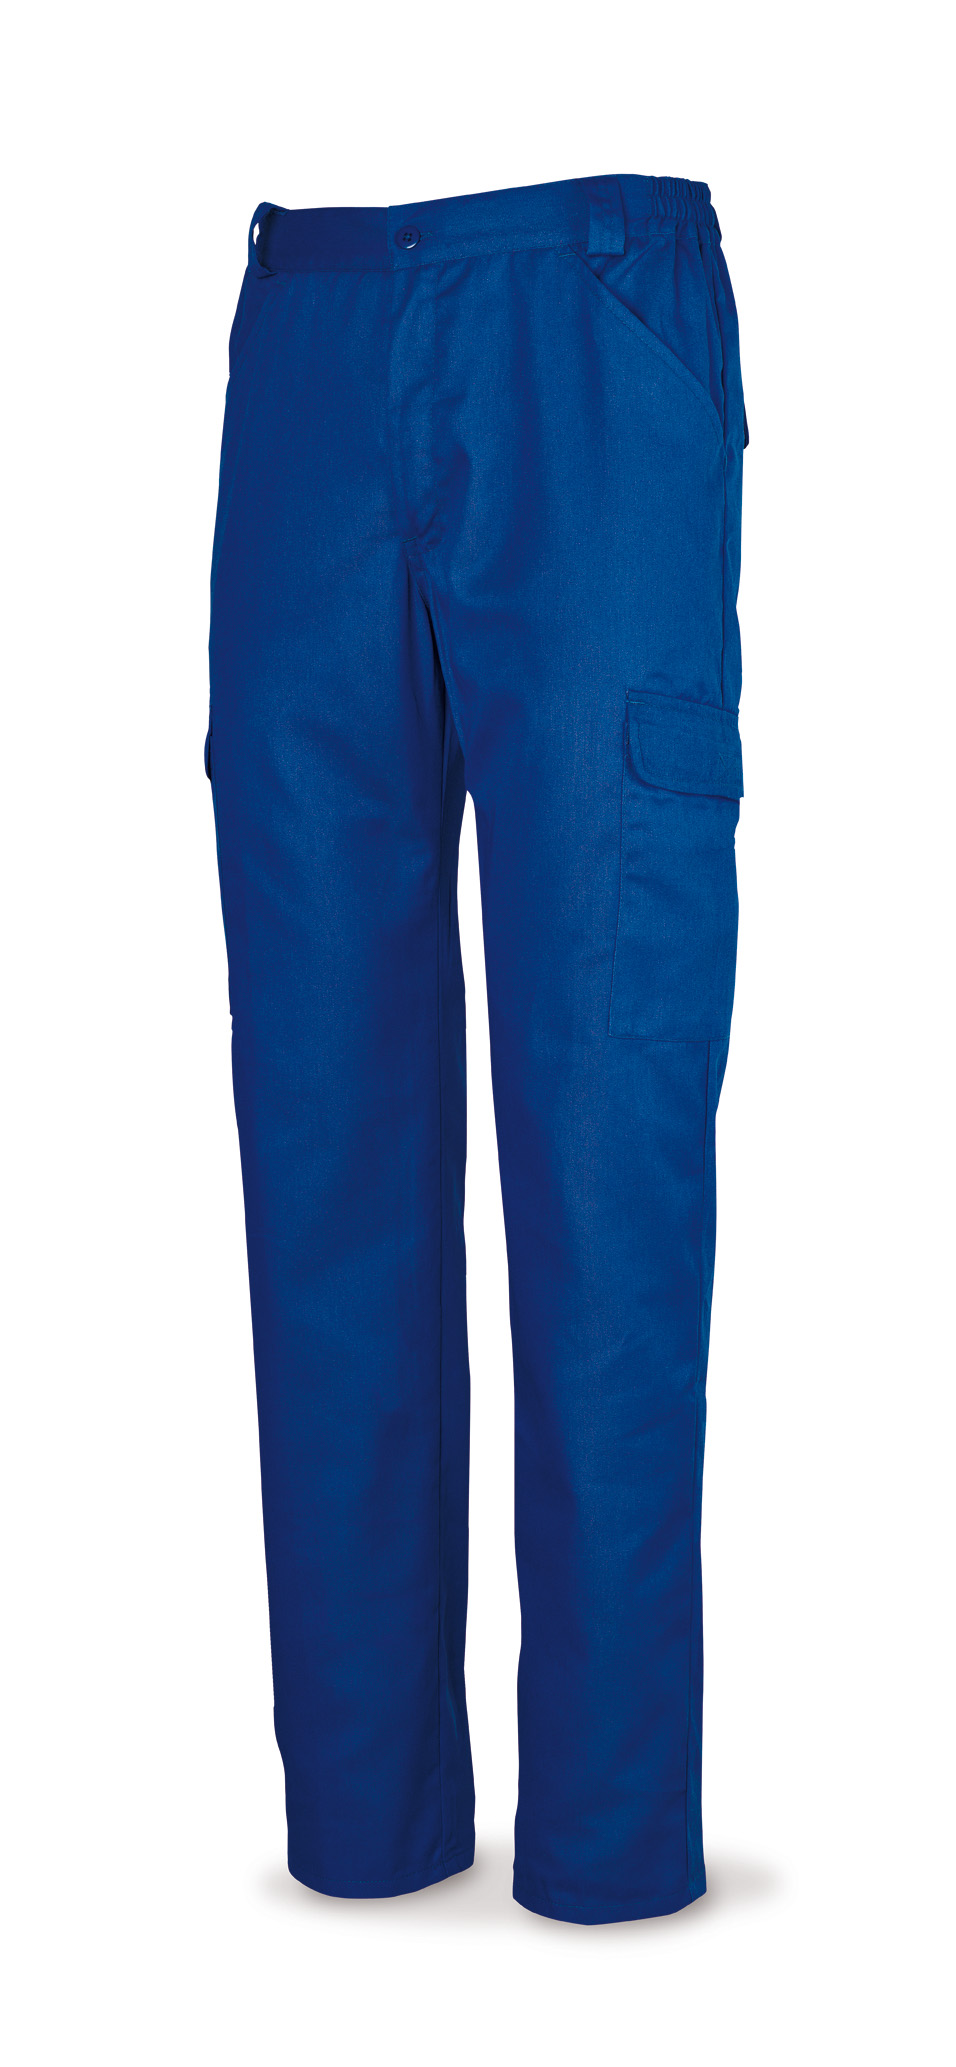 388-P Vestuario Laboral Serie Básica Pantalón azulina poliéster/algodón 200 g. Multibolsillos